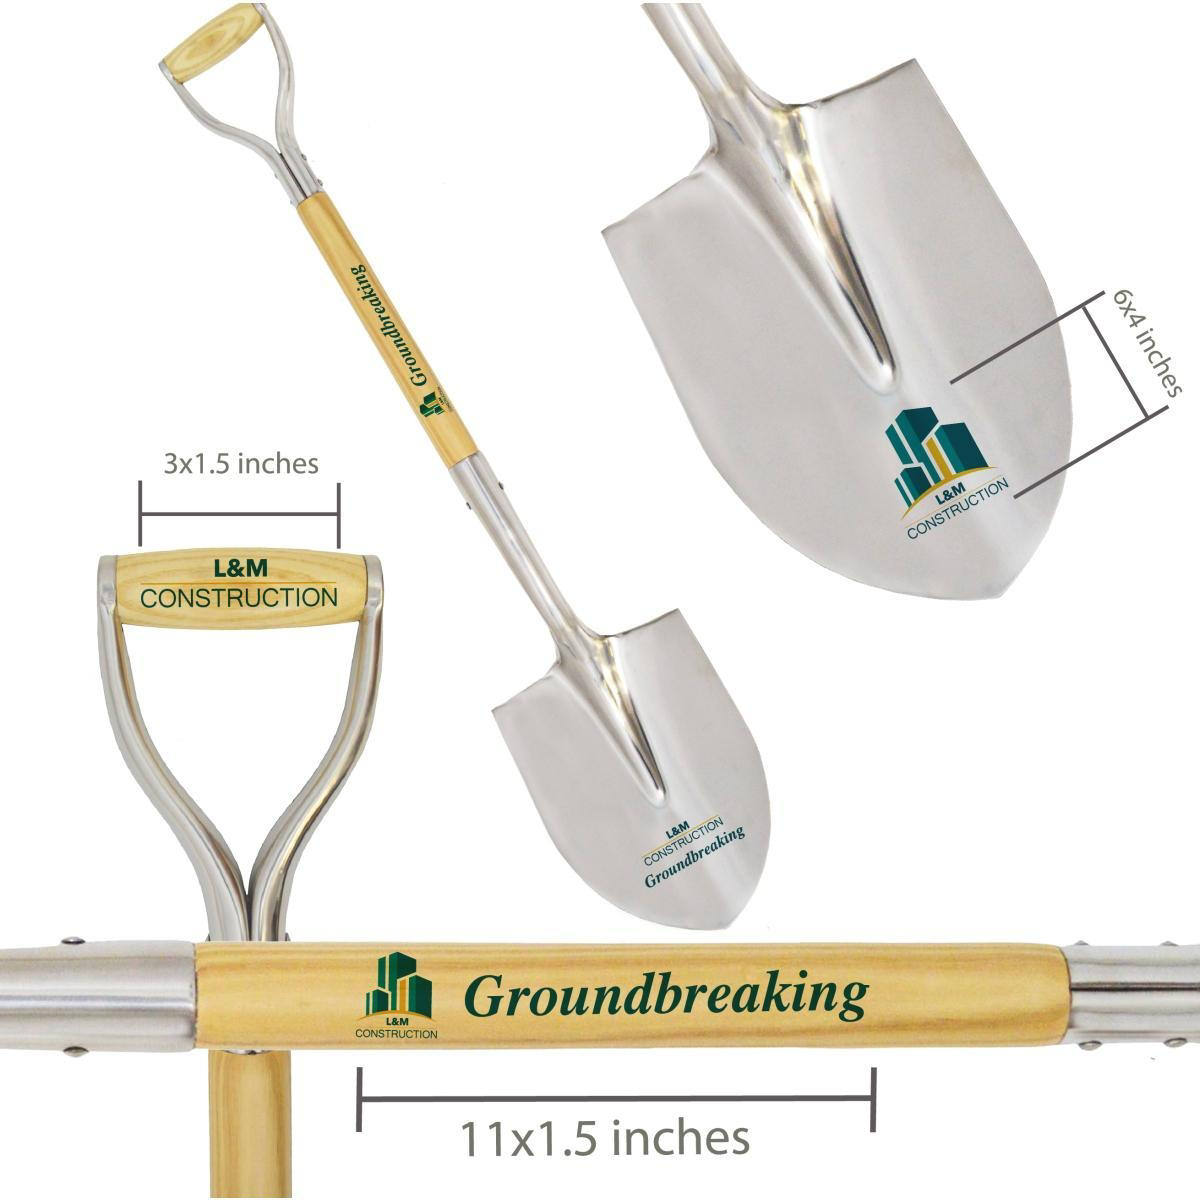 groundbreaking shovel blade printing options